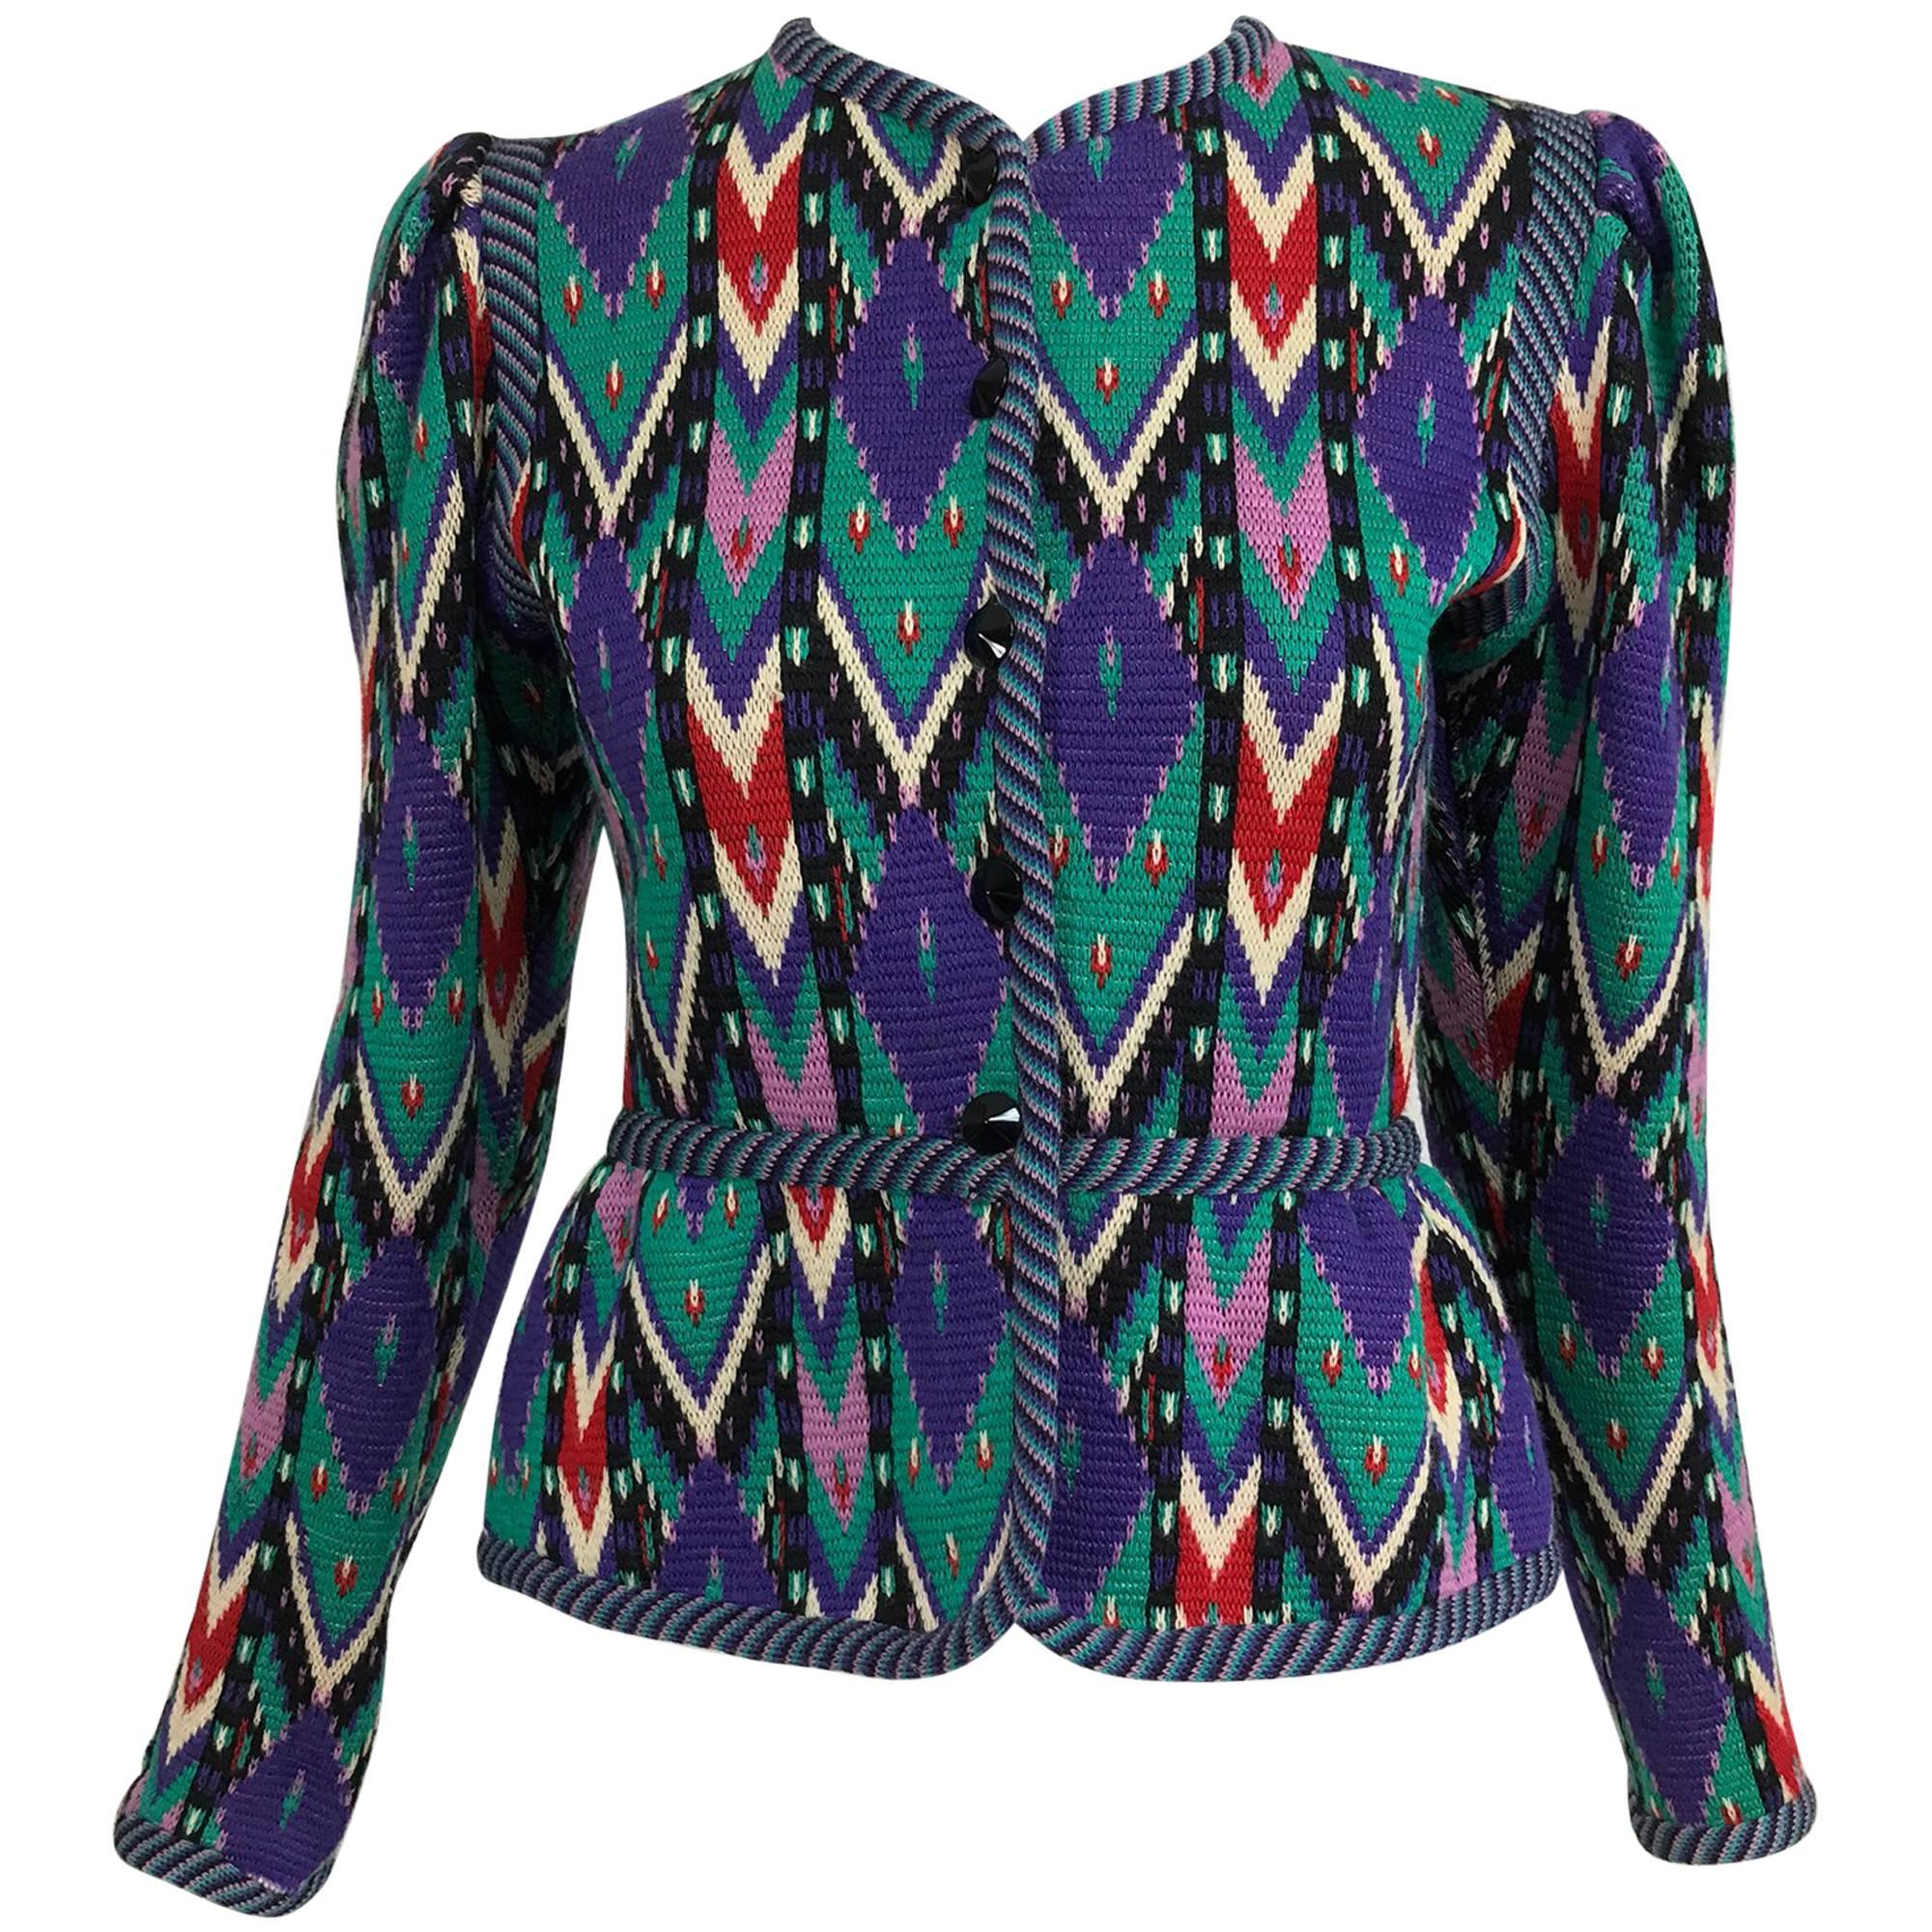 Yves Saint Laurent colourful geometric cardigan sweater 1970s